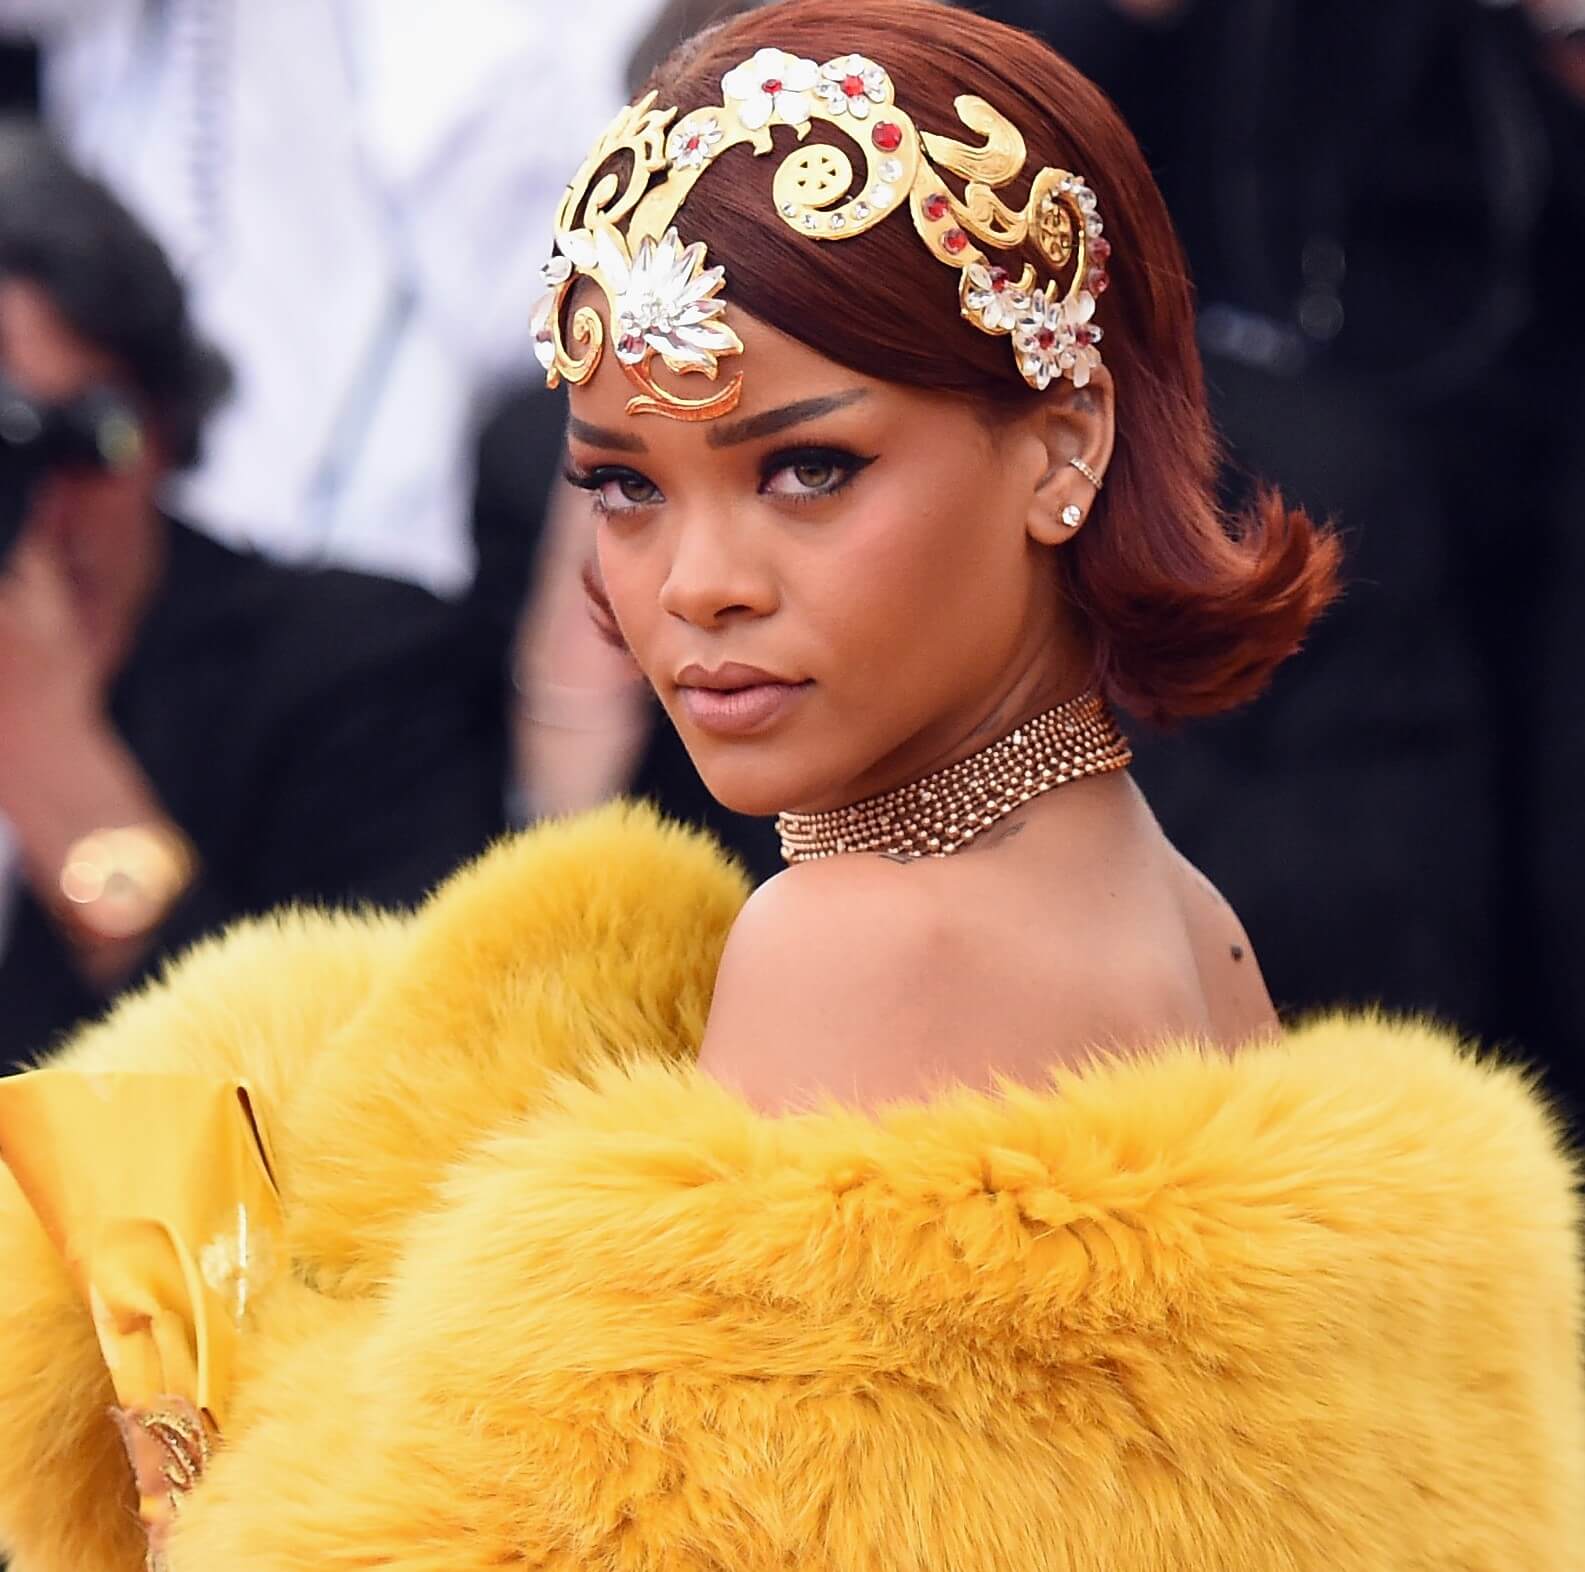 Rihanna wearing a crown